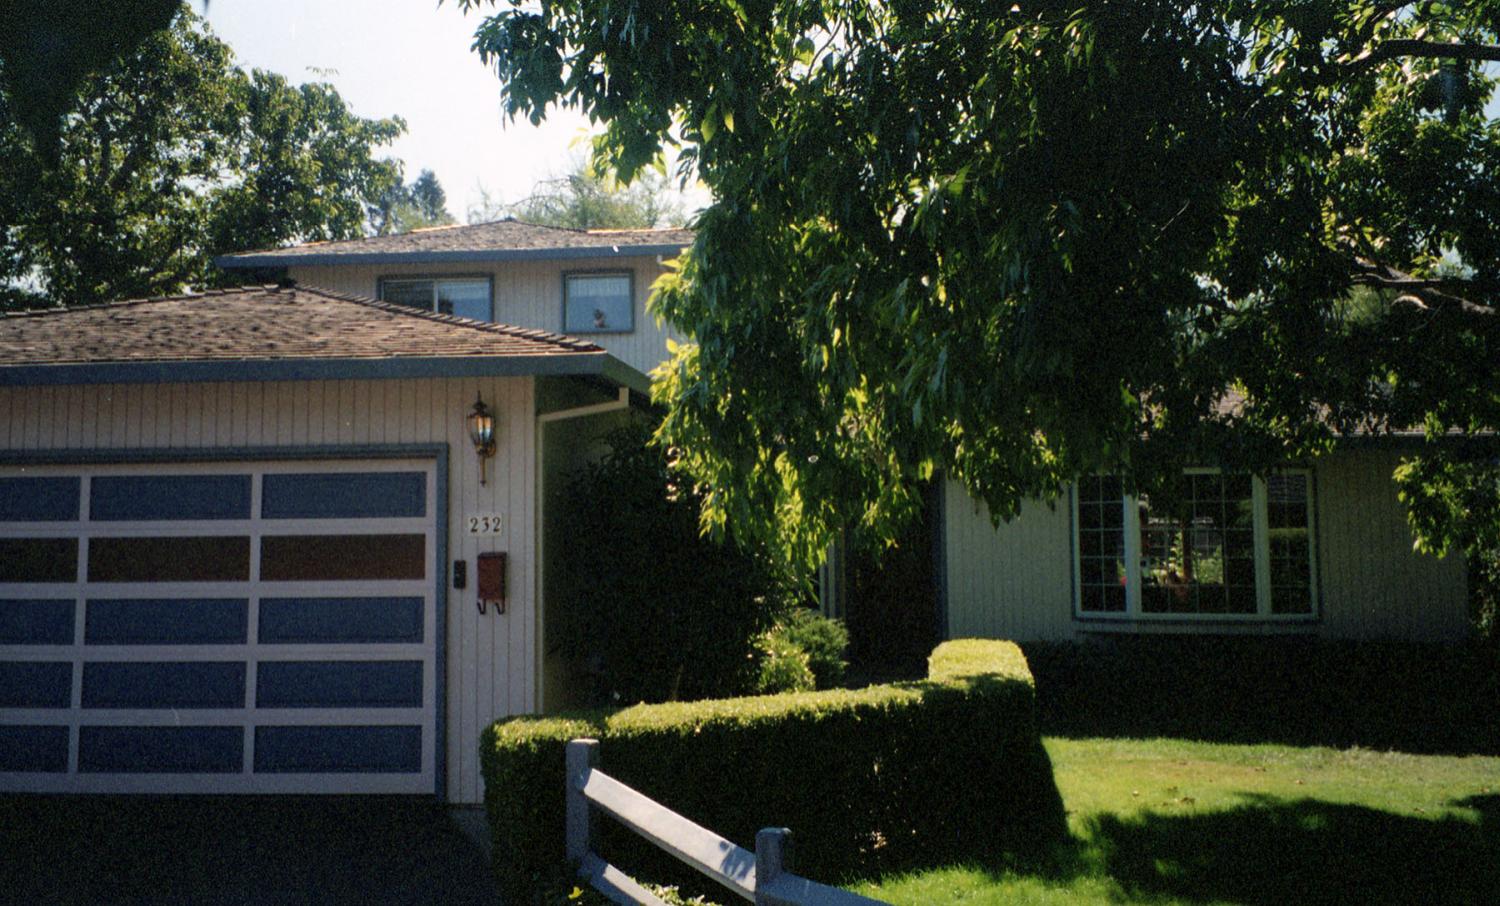 Susan_s Garage — Google_s first home